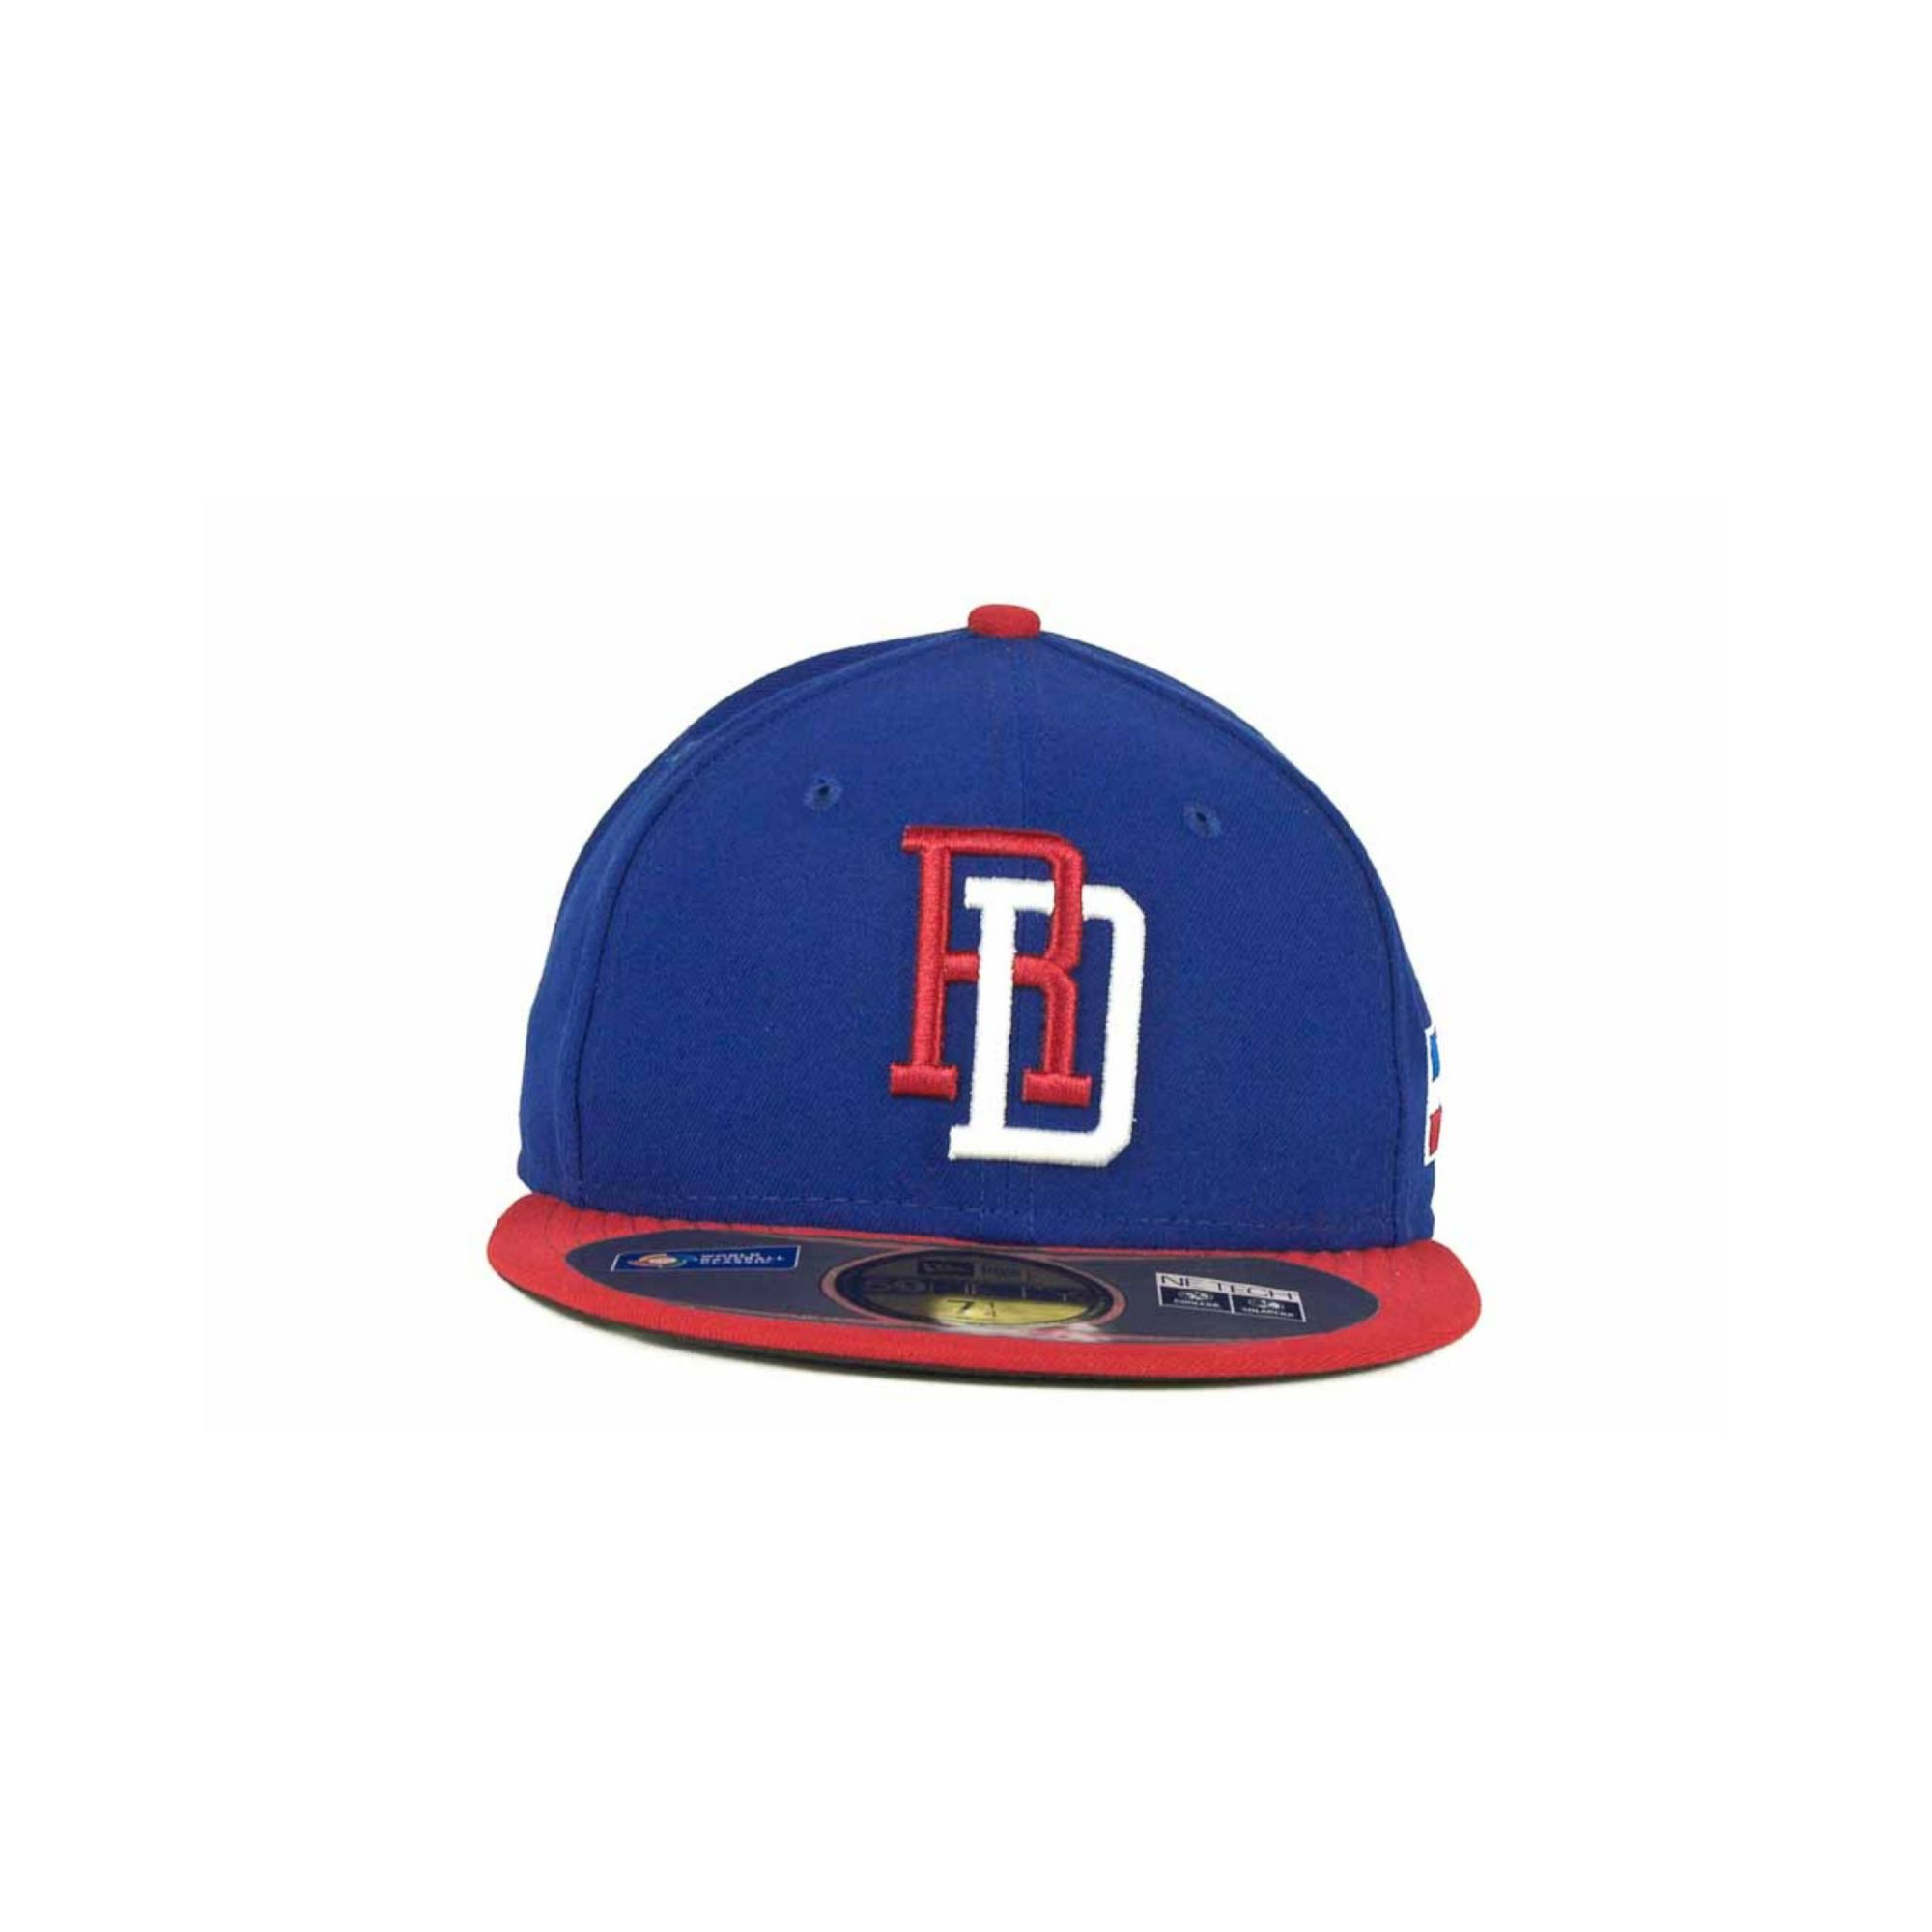 New Era Dominican Republic World Baseball Classic 59fifty Cap in Blue